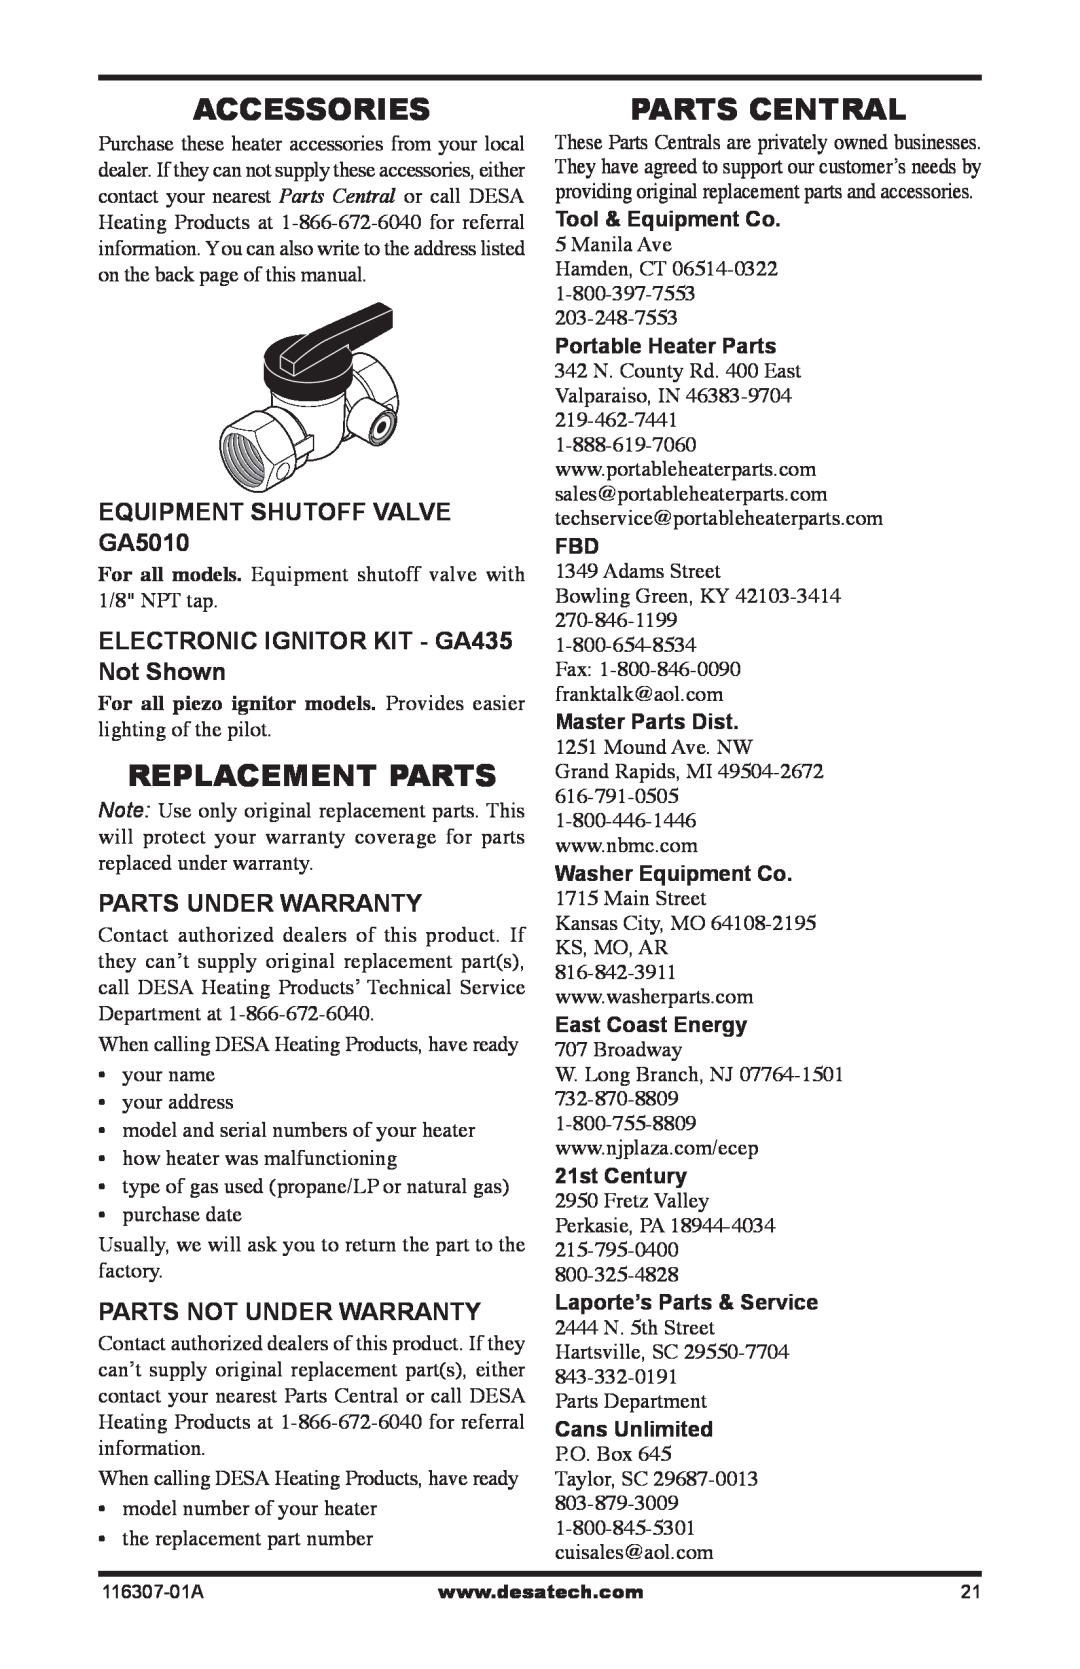 Desa SF20NT Accessories, Replacement Parts, Parts Central, EQUIPMENT SHUTOFF VALVE GA5010, Parts Under Warranty 